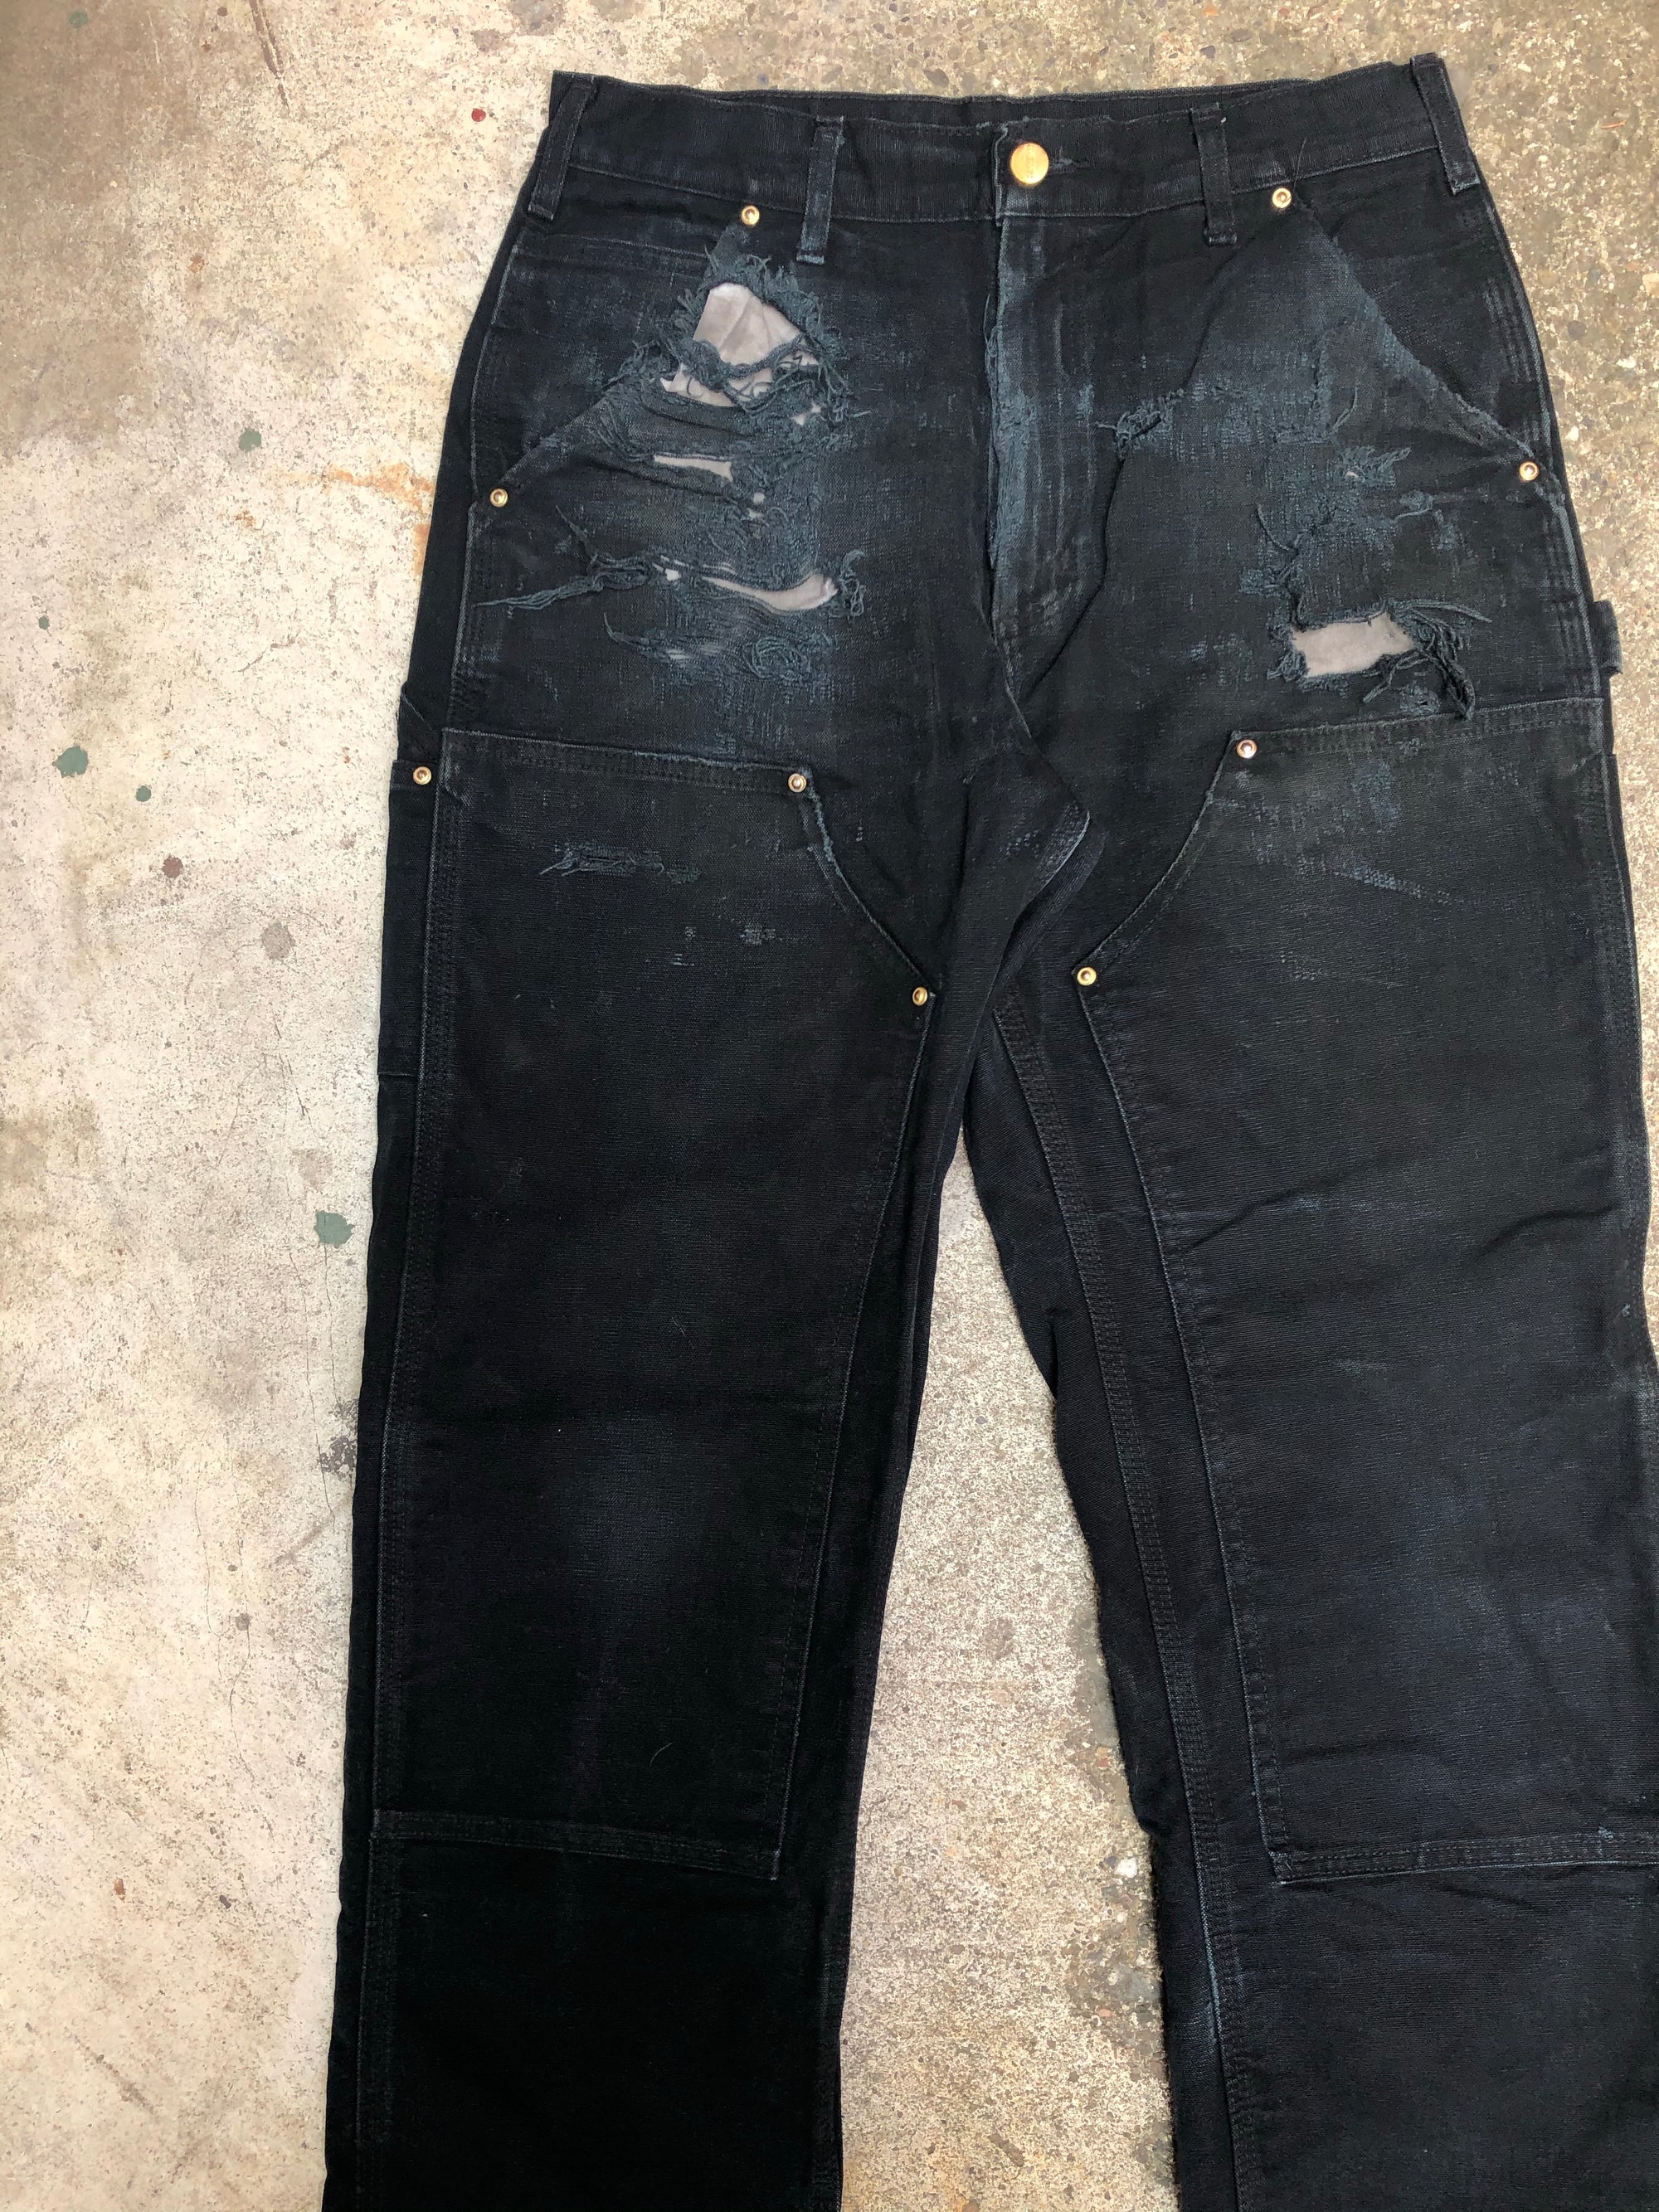 Carhartt B01 Black Double Front Knee Work Pants (31X29)